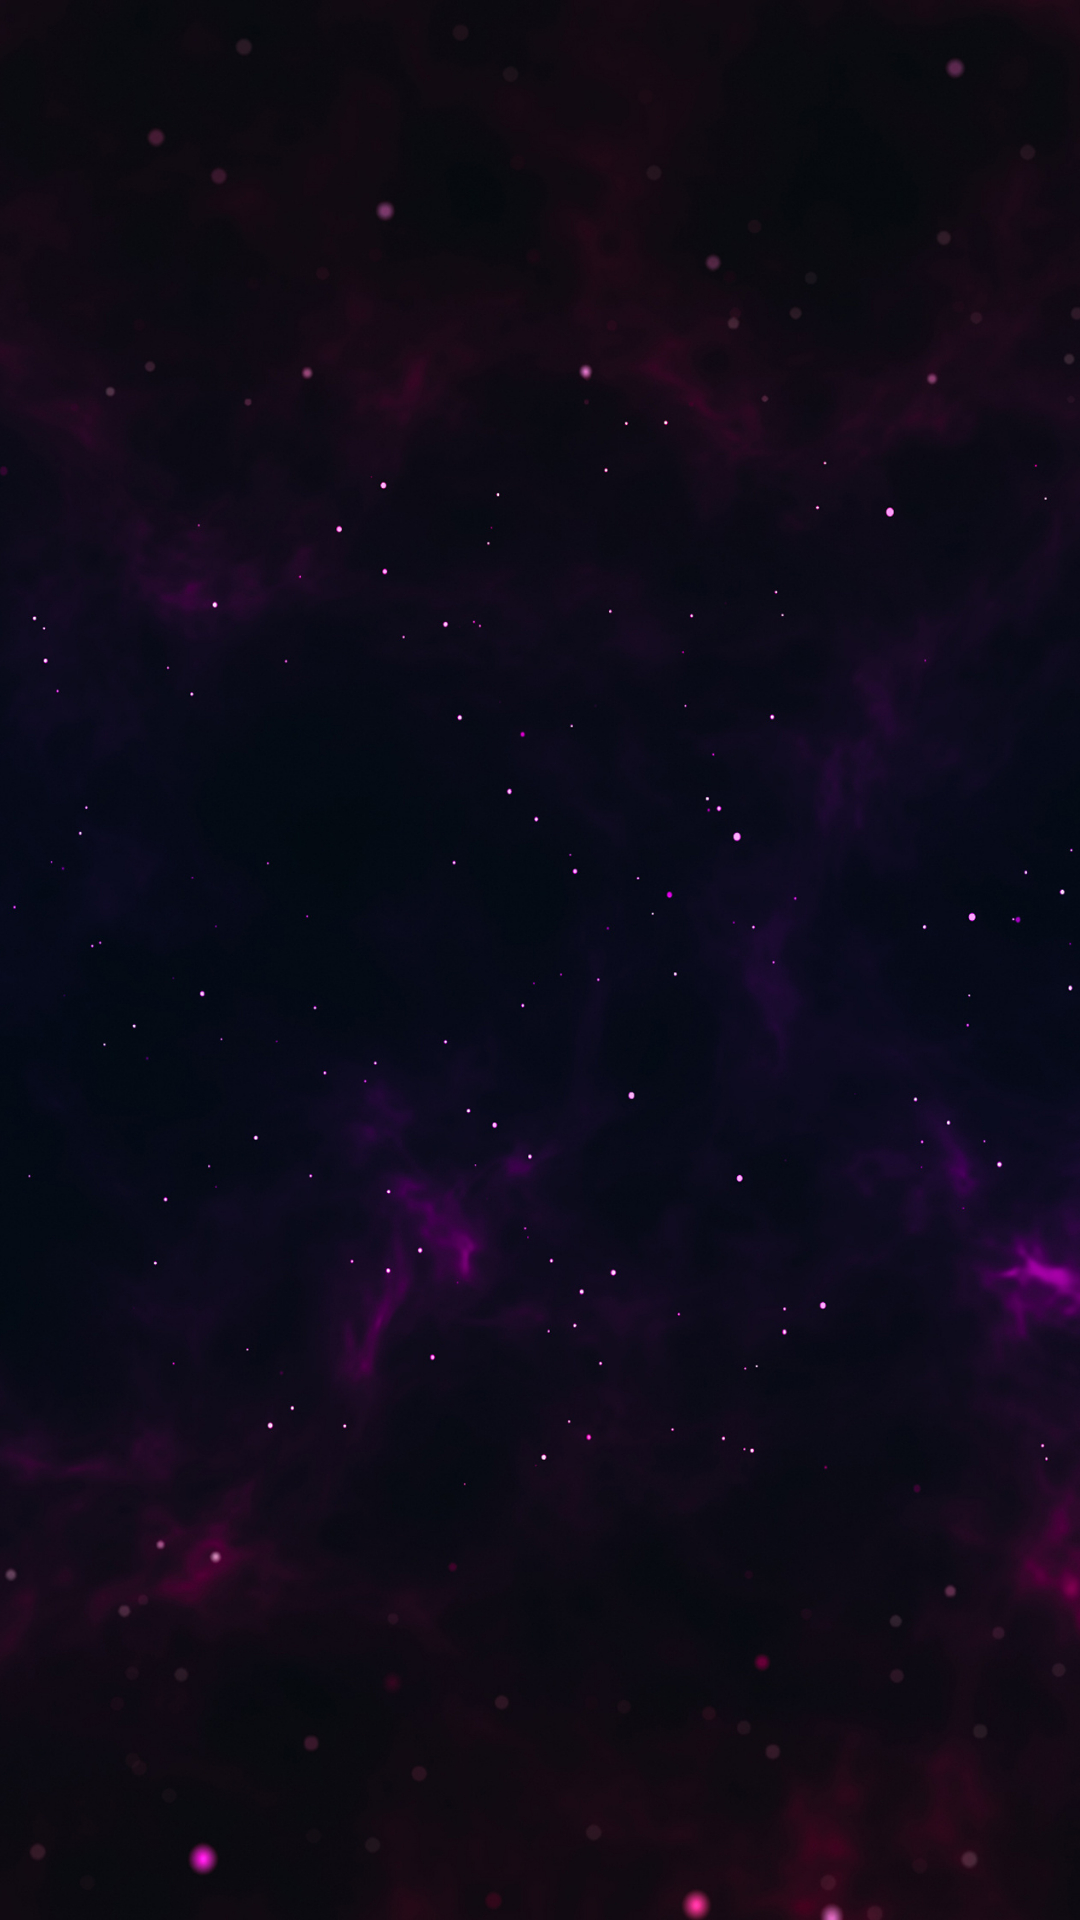 1080x1920 Free Aesthetic Galaxy Wallpaper | Aesthetic galaxy, Purple galaxy wallpaper, Galaxy wallpaper